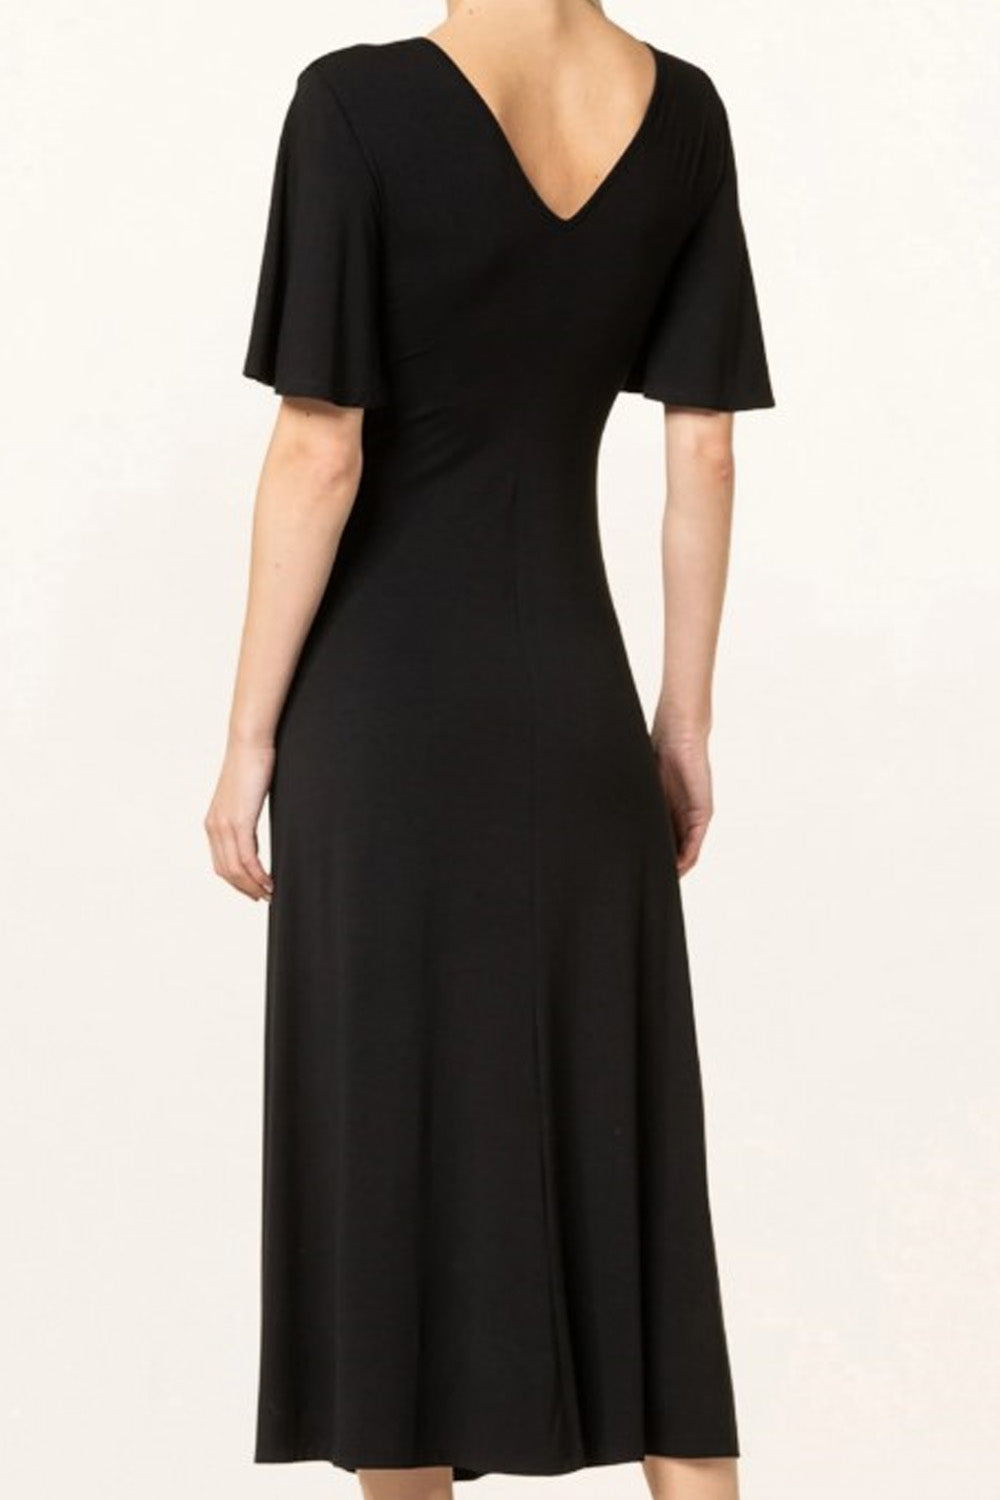 Viridescent Black Dress